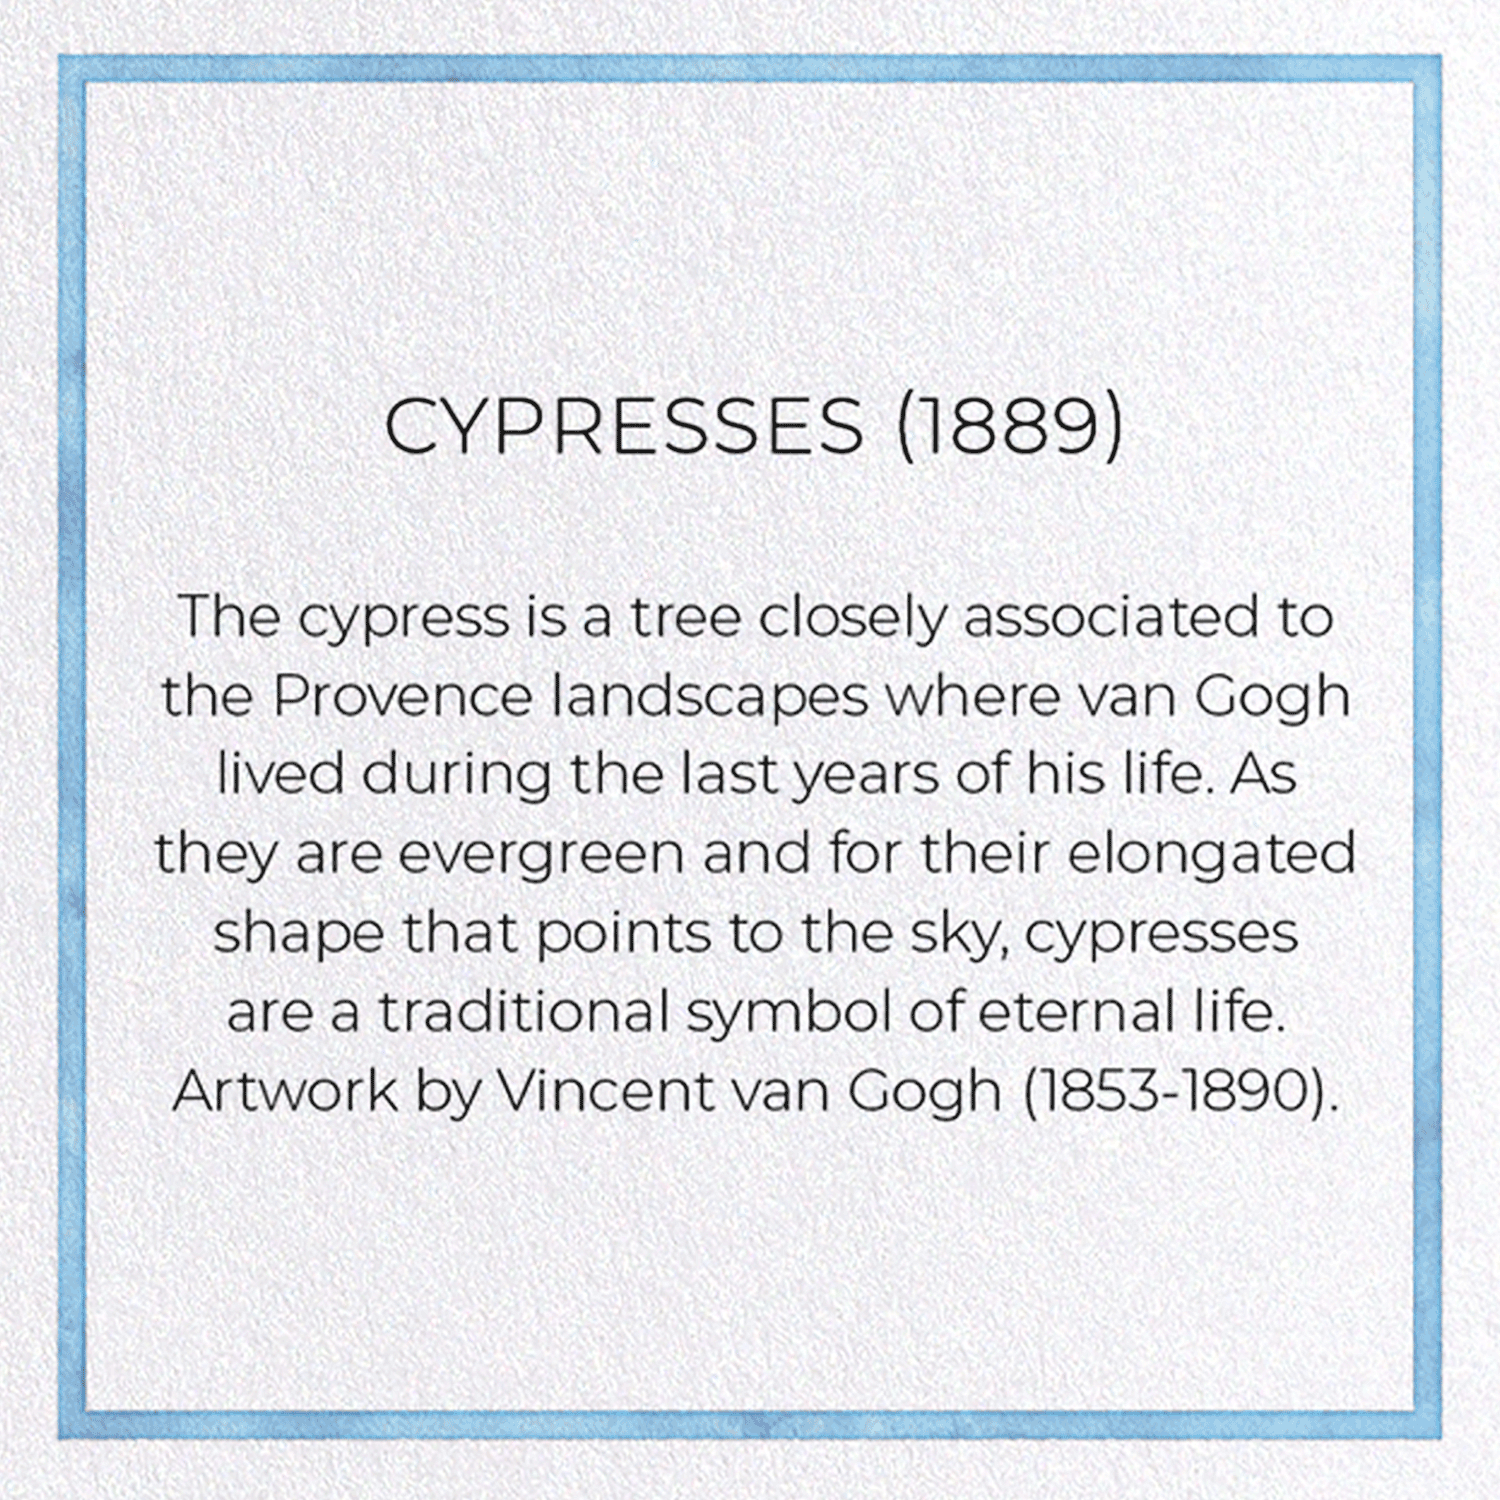 CYPRESSES (1889)